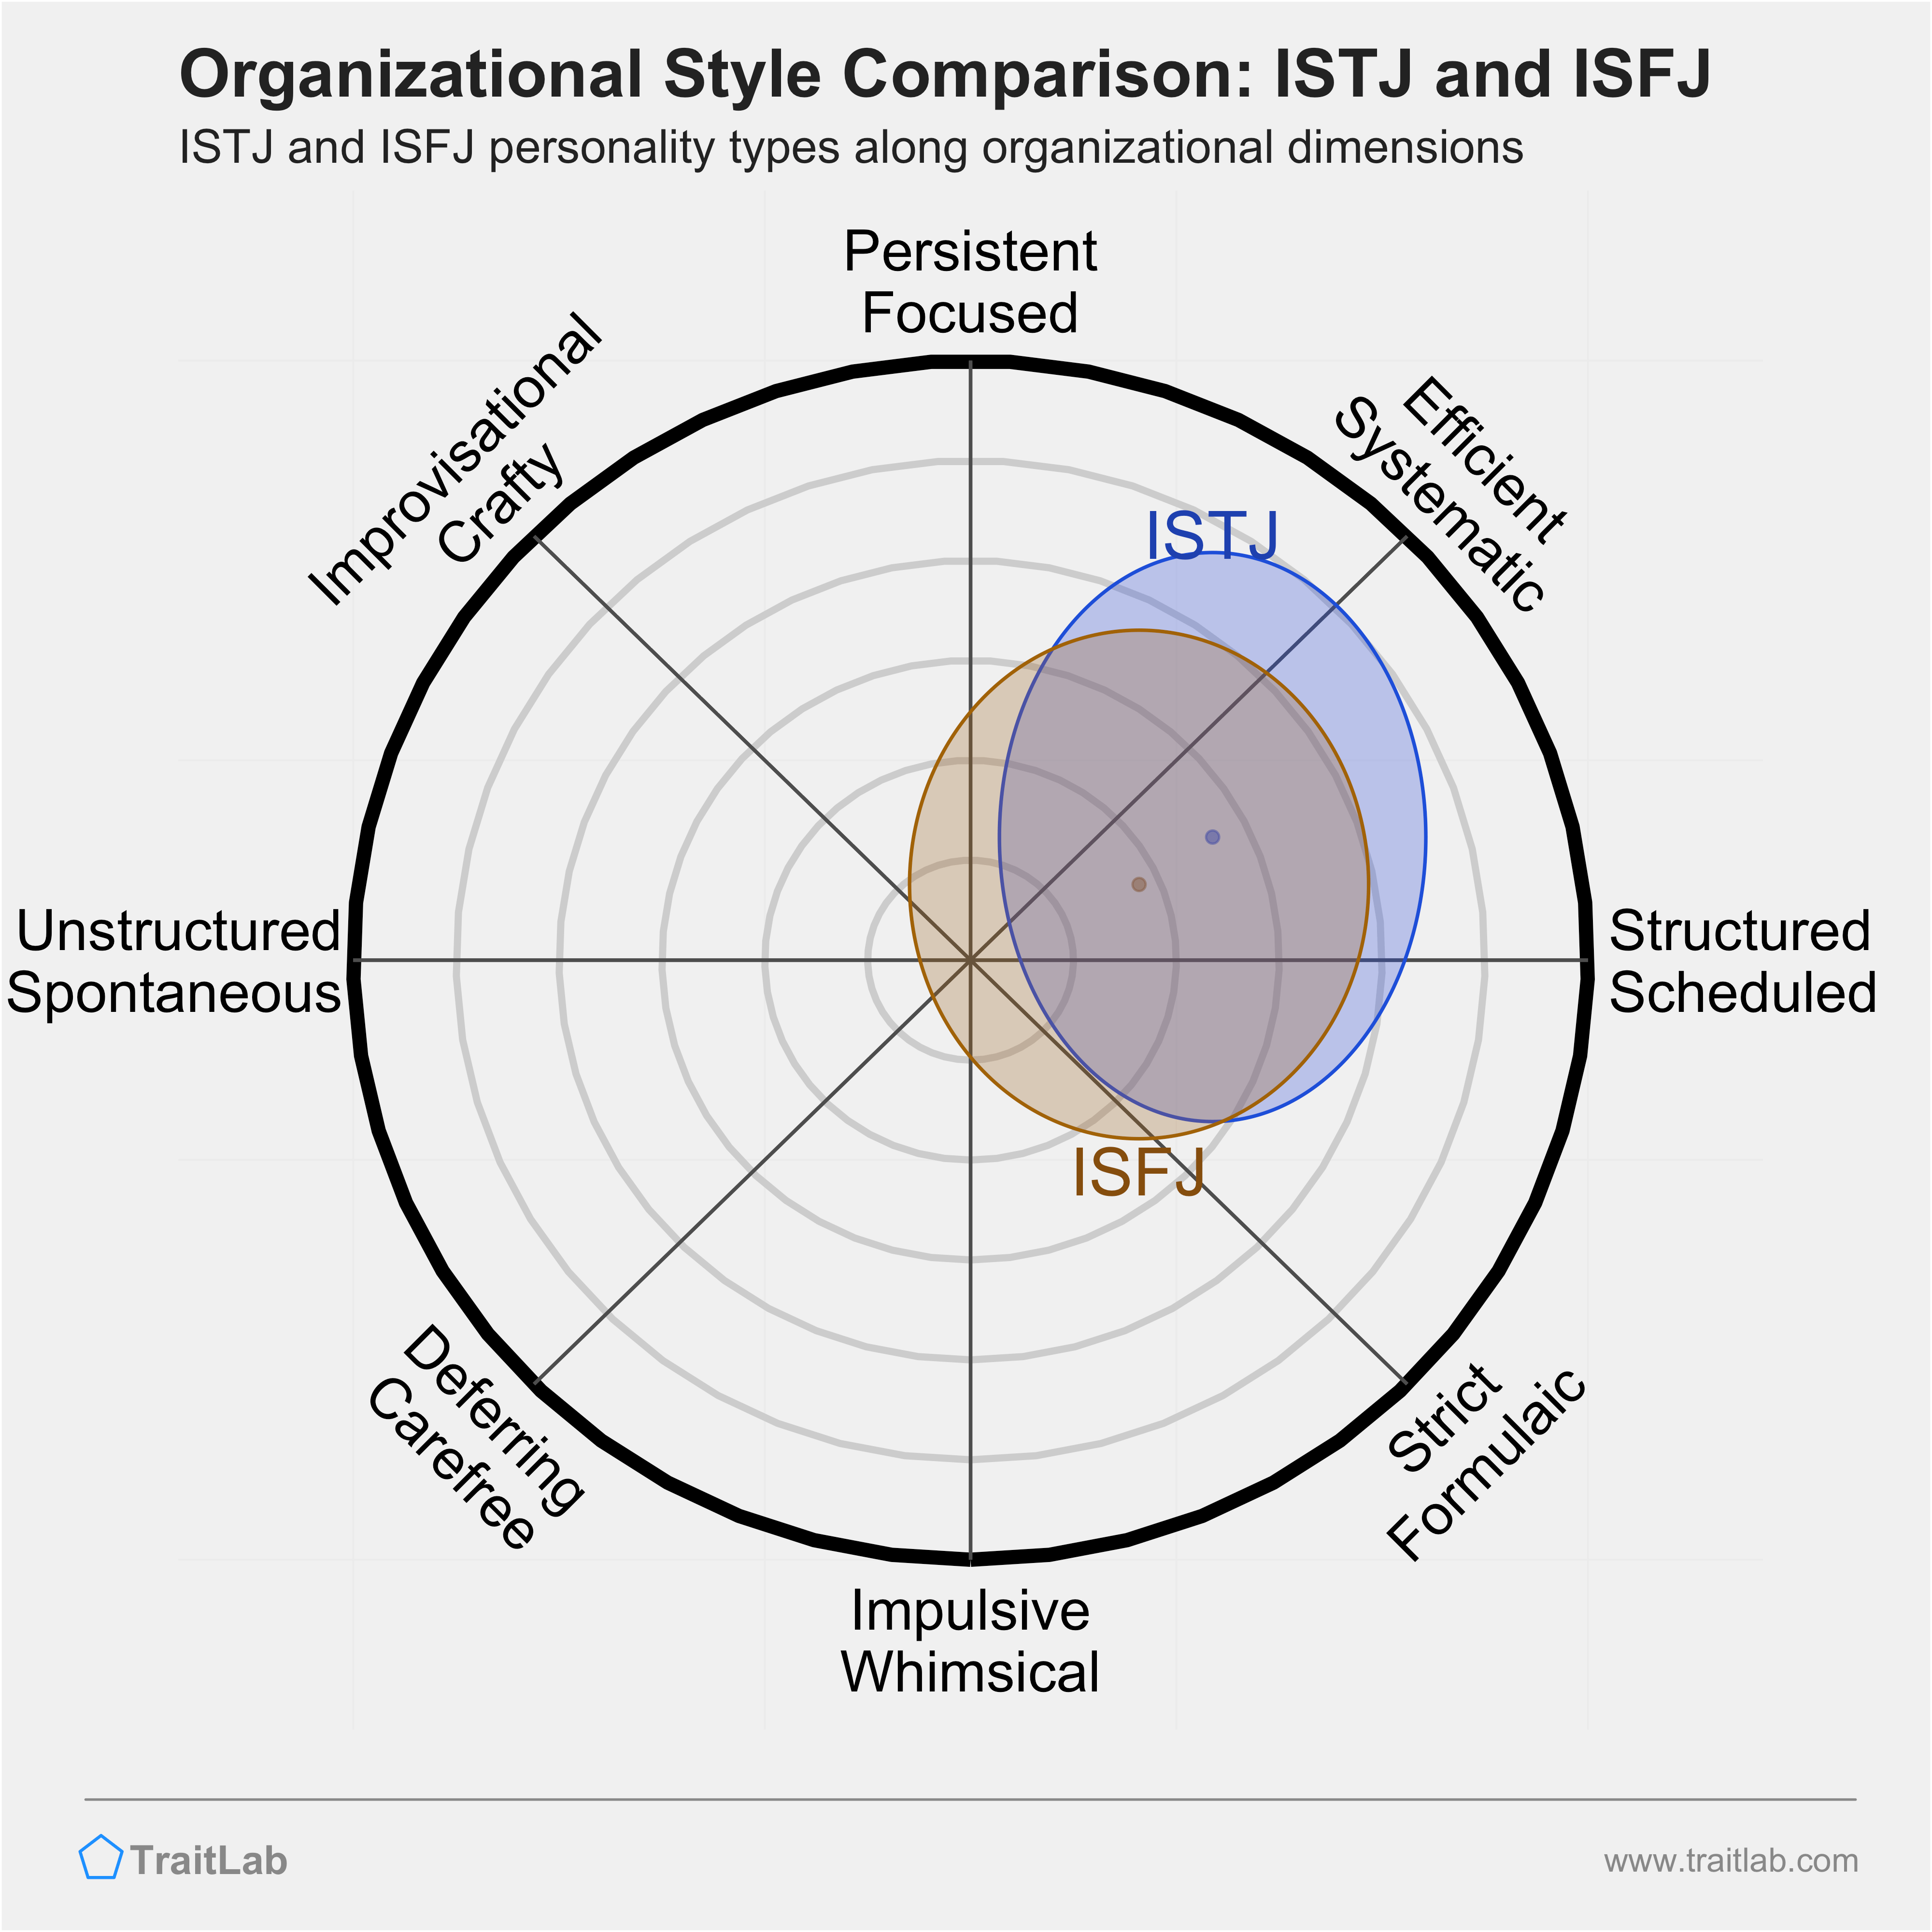 ISTJ and ISFJ comparison across organizational dimensions